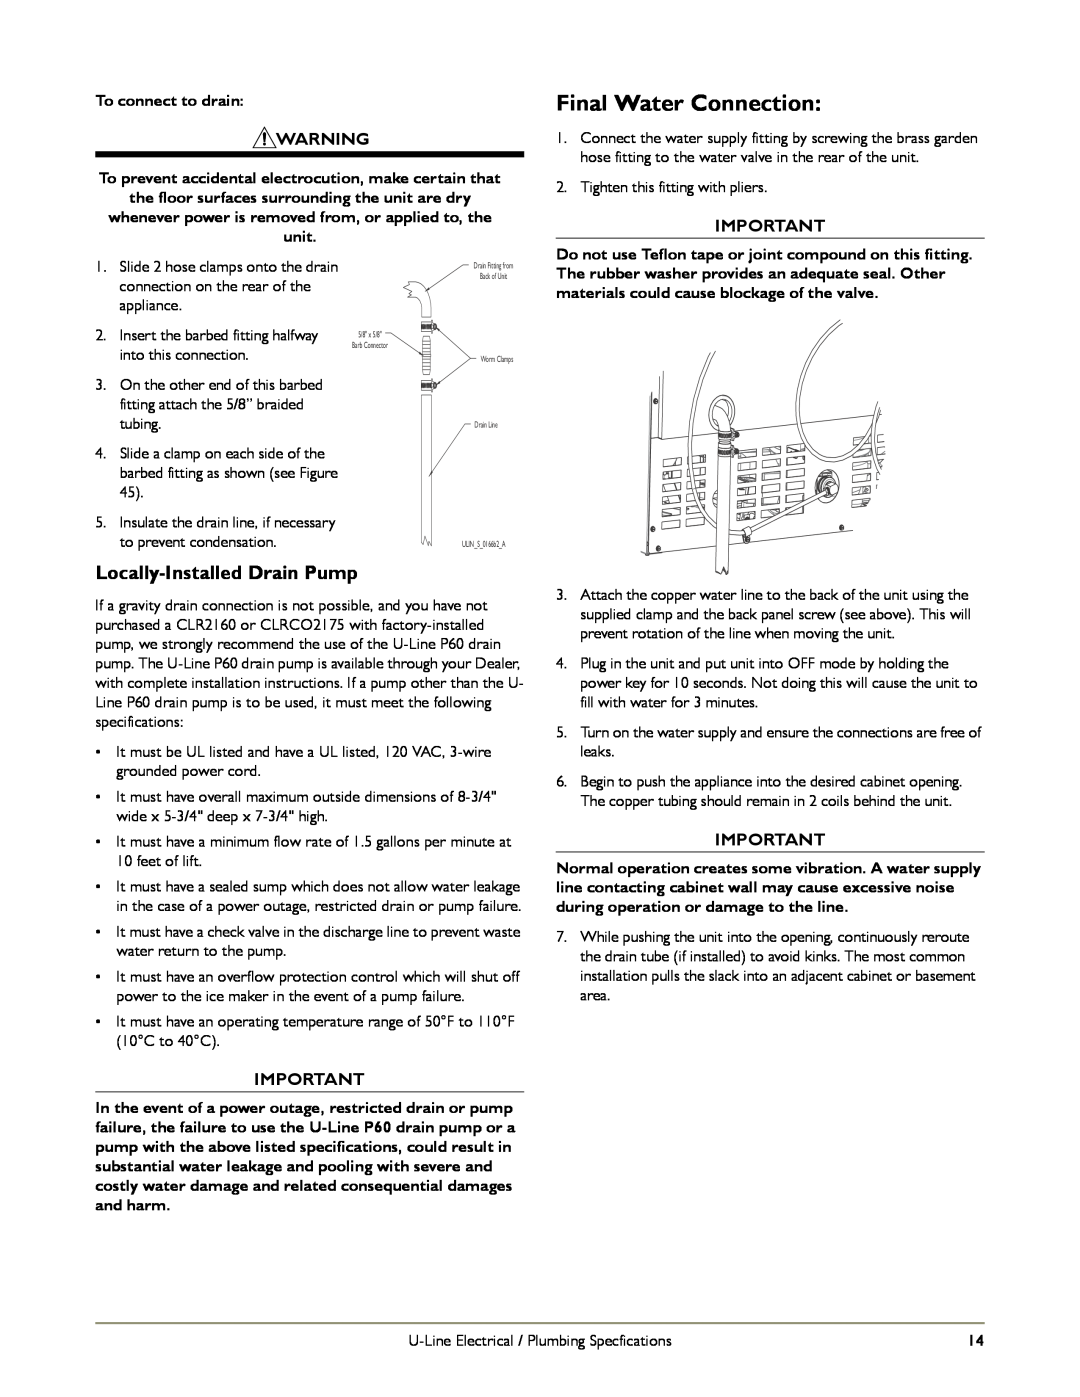 U-Line CO1175, CO2175 manual Final Water Connection, Locally-InstalledDrain Pump 